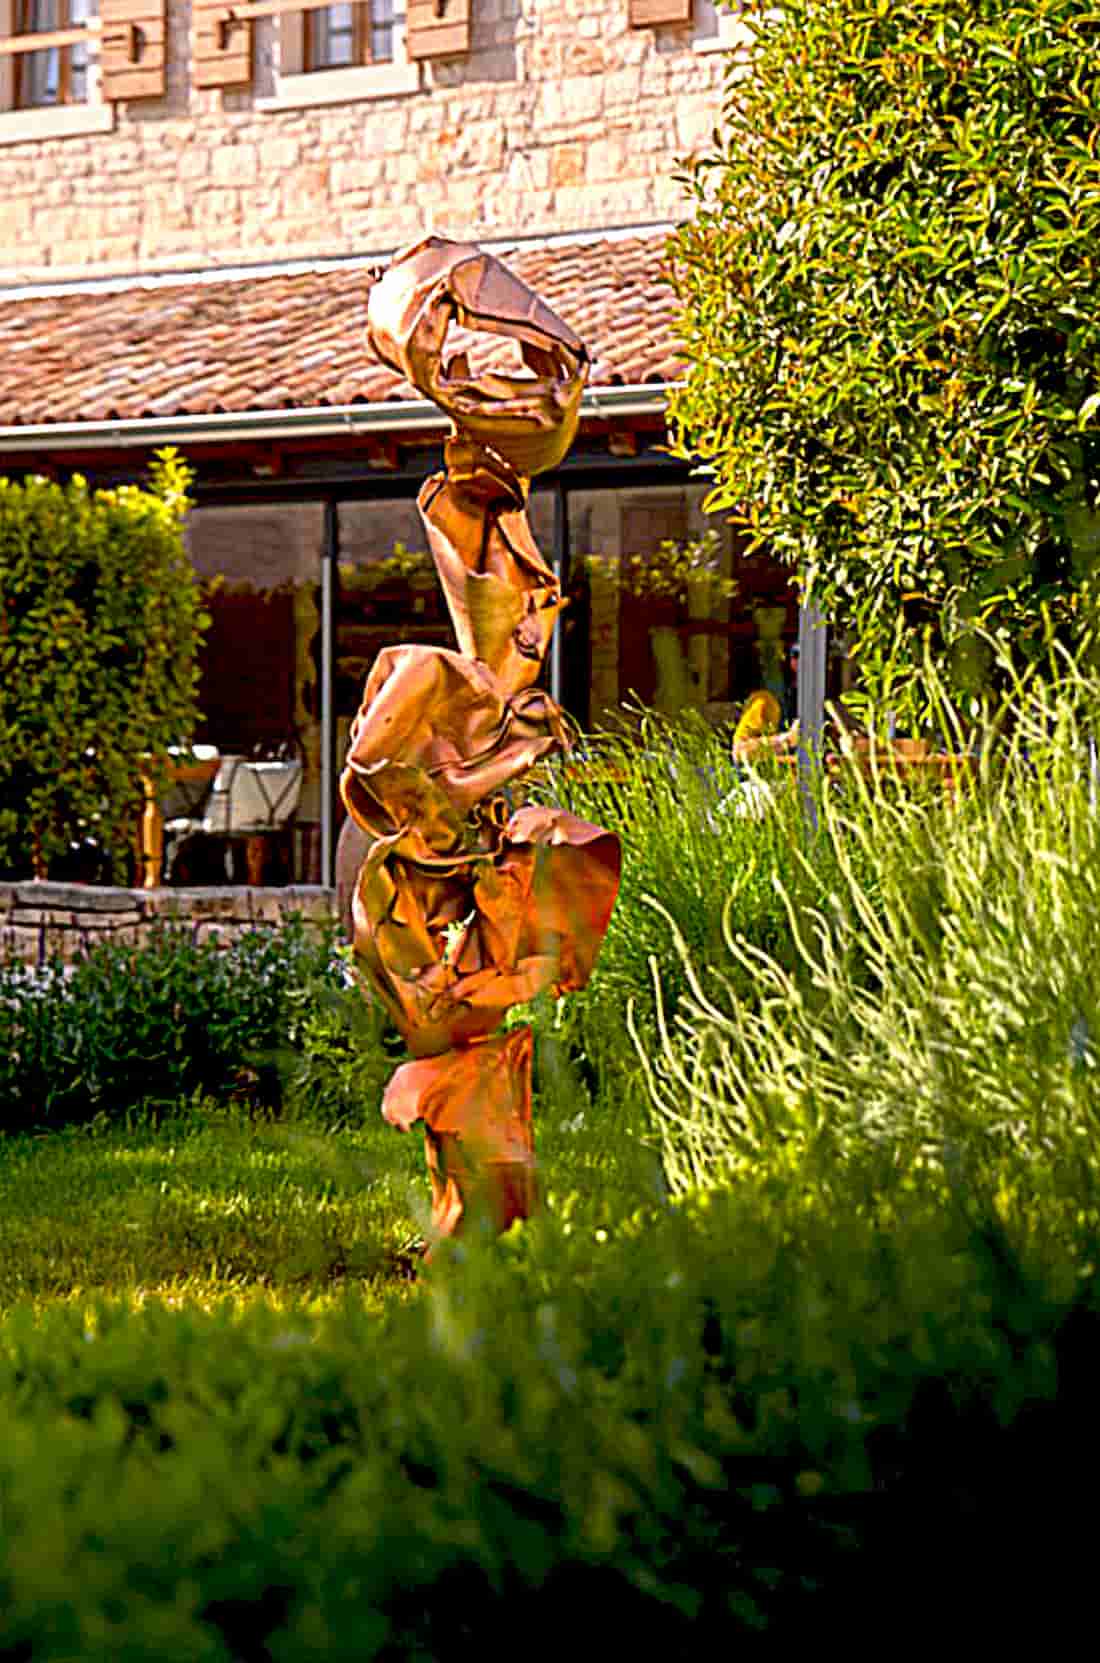 Istria Sculpture Garden Features Arne Quinze